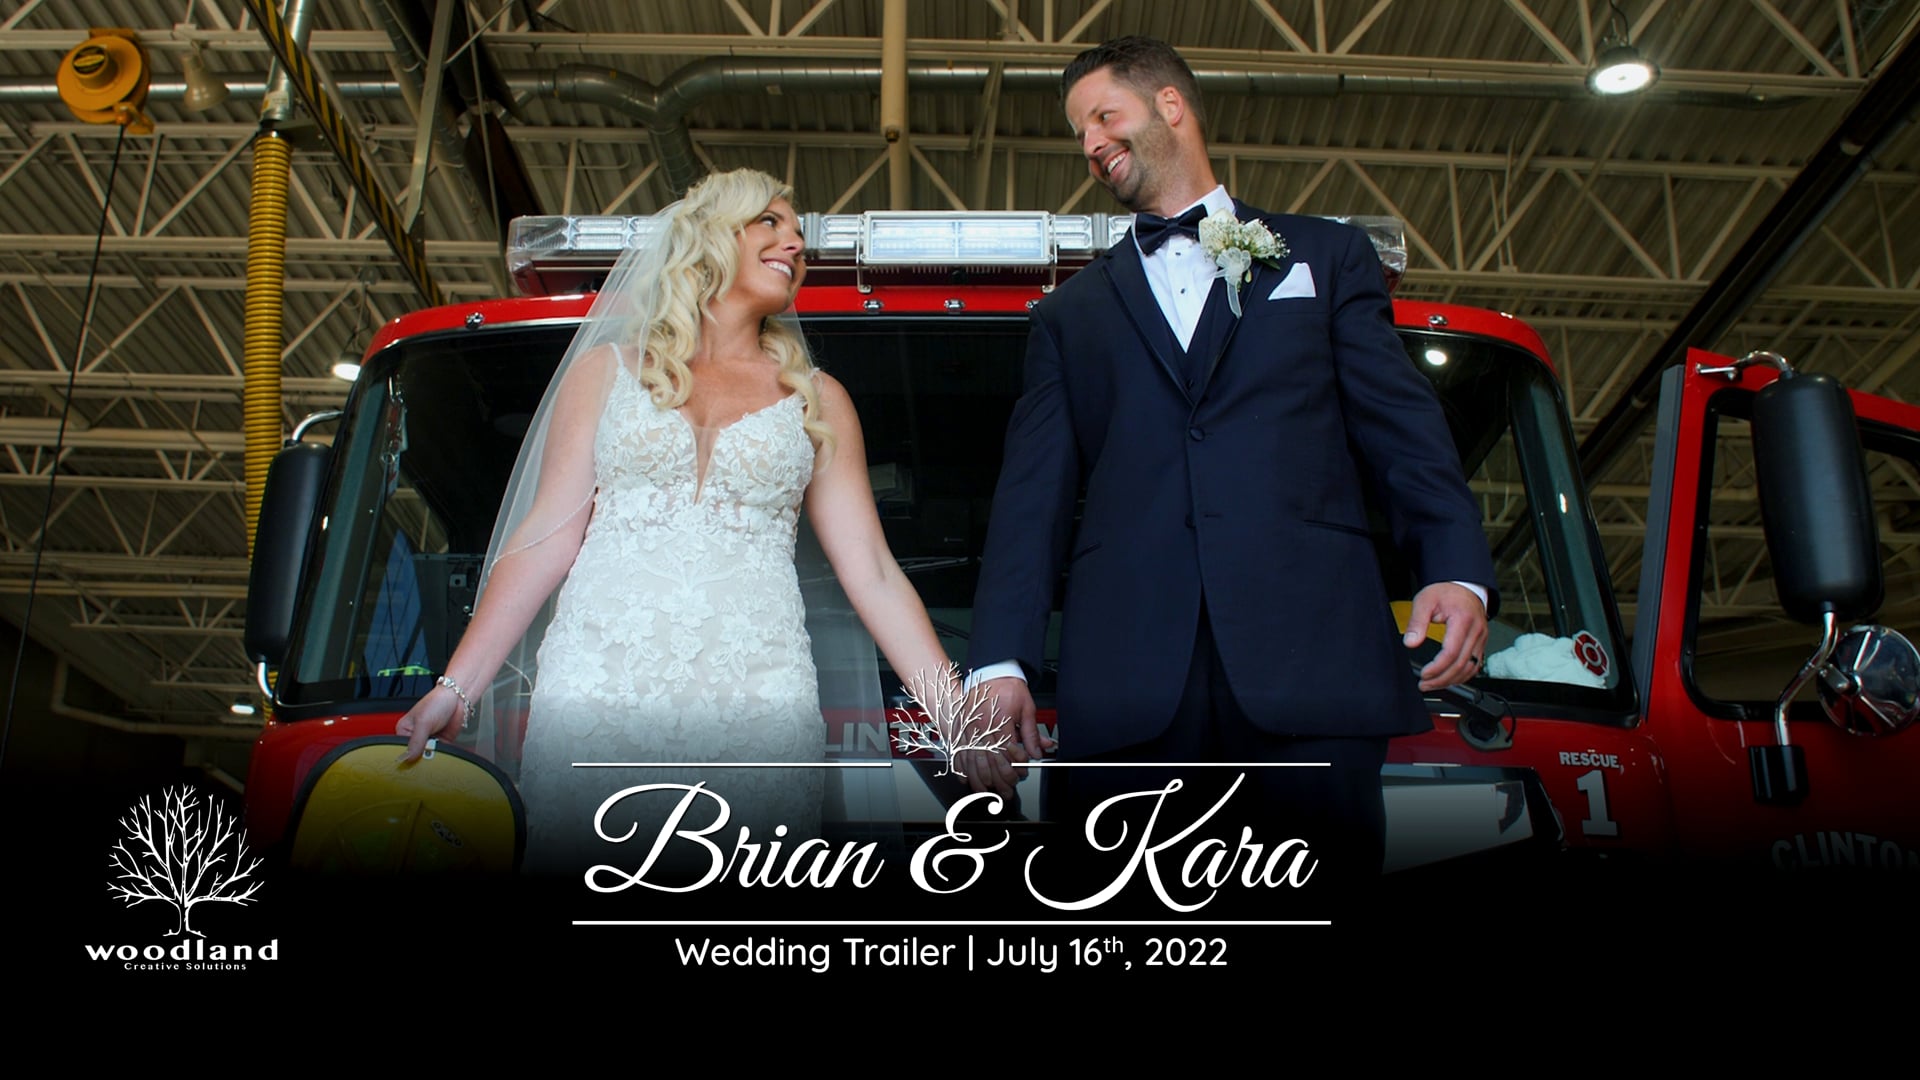 Brian & Kara - Wedding Trailer